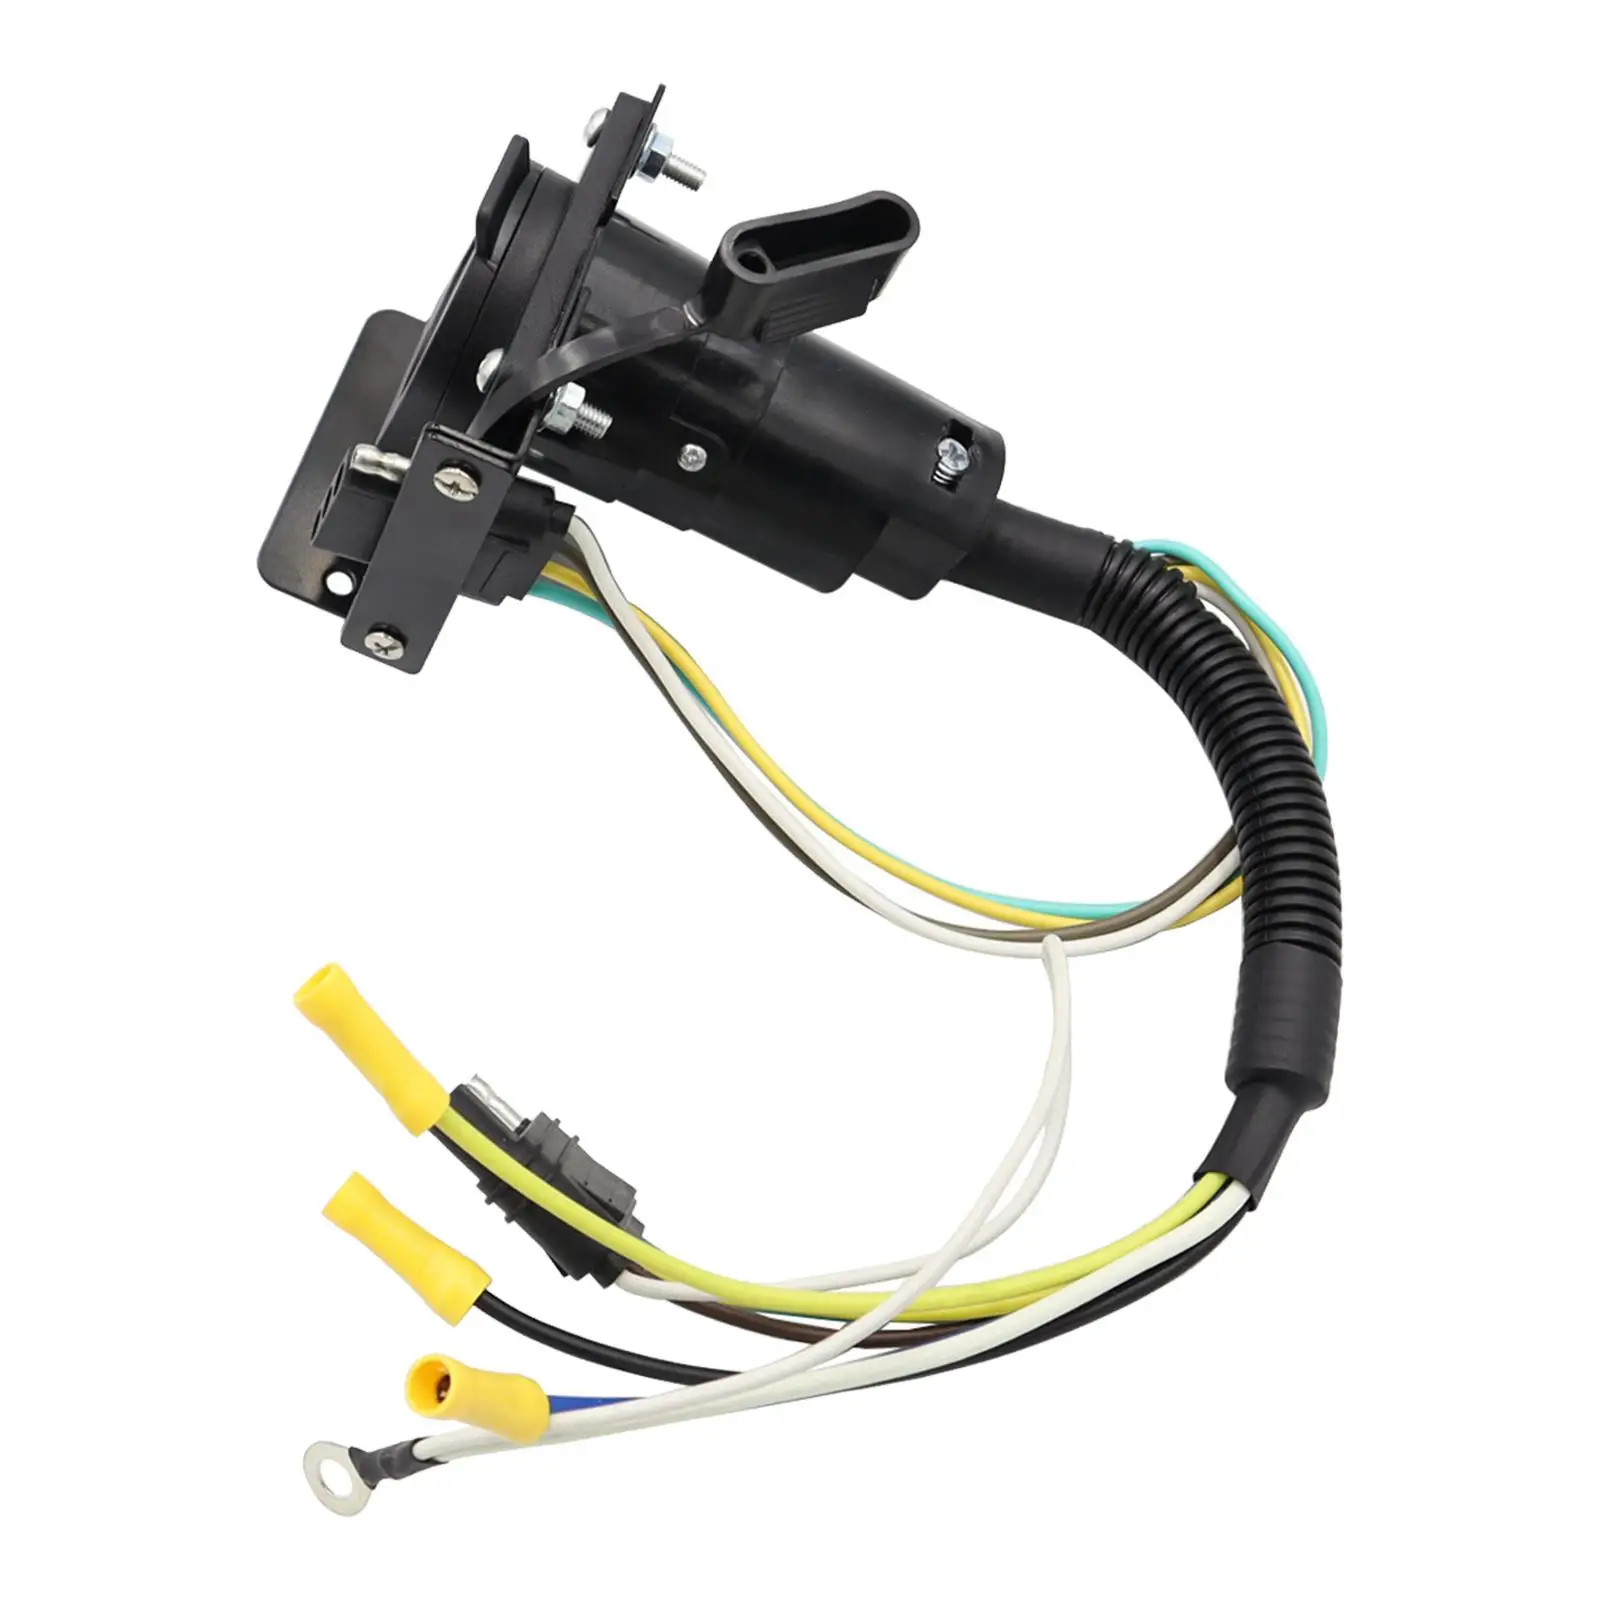 RV Trailer Adapter Plug Easy Installation Professional for Motorhome